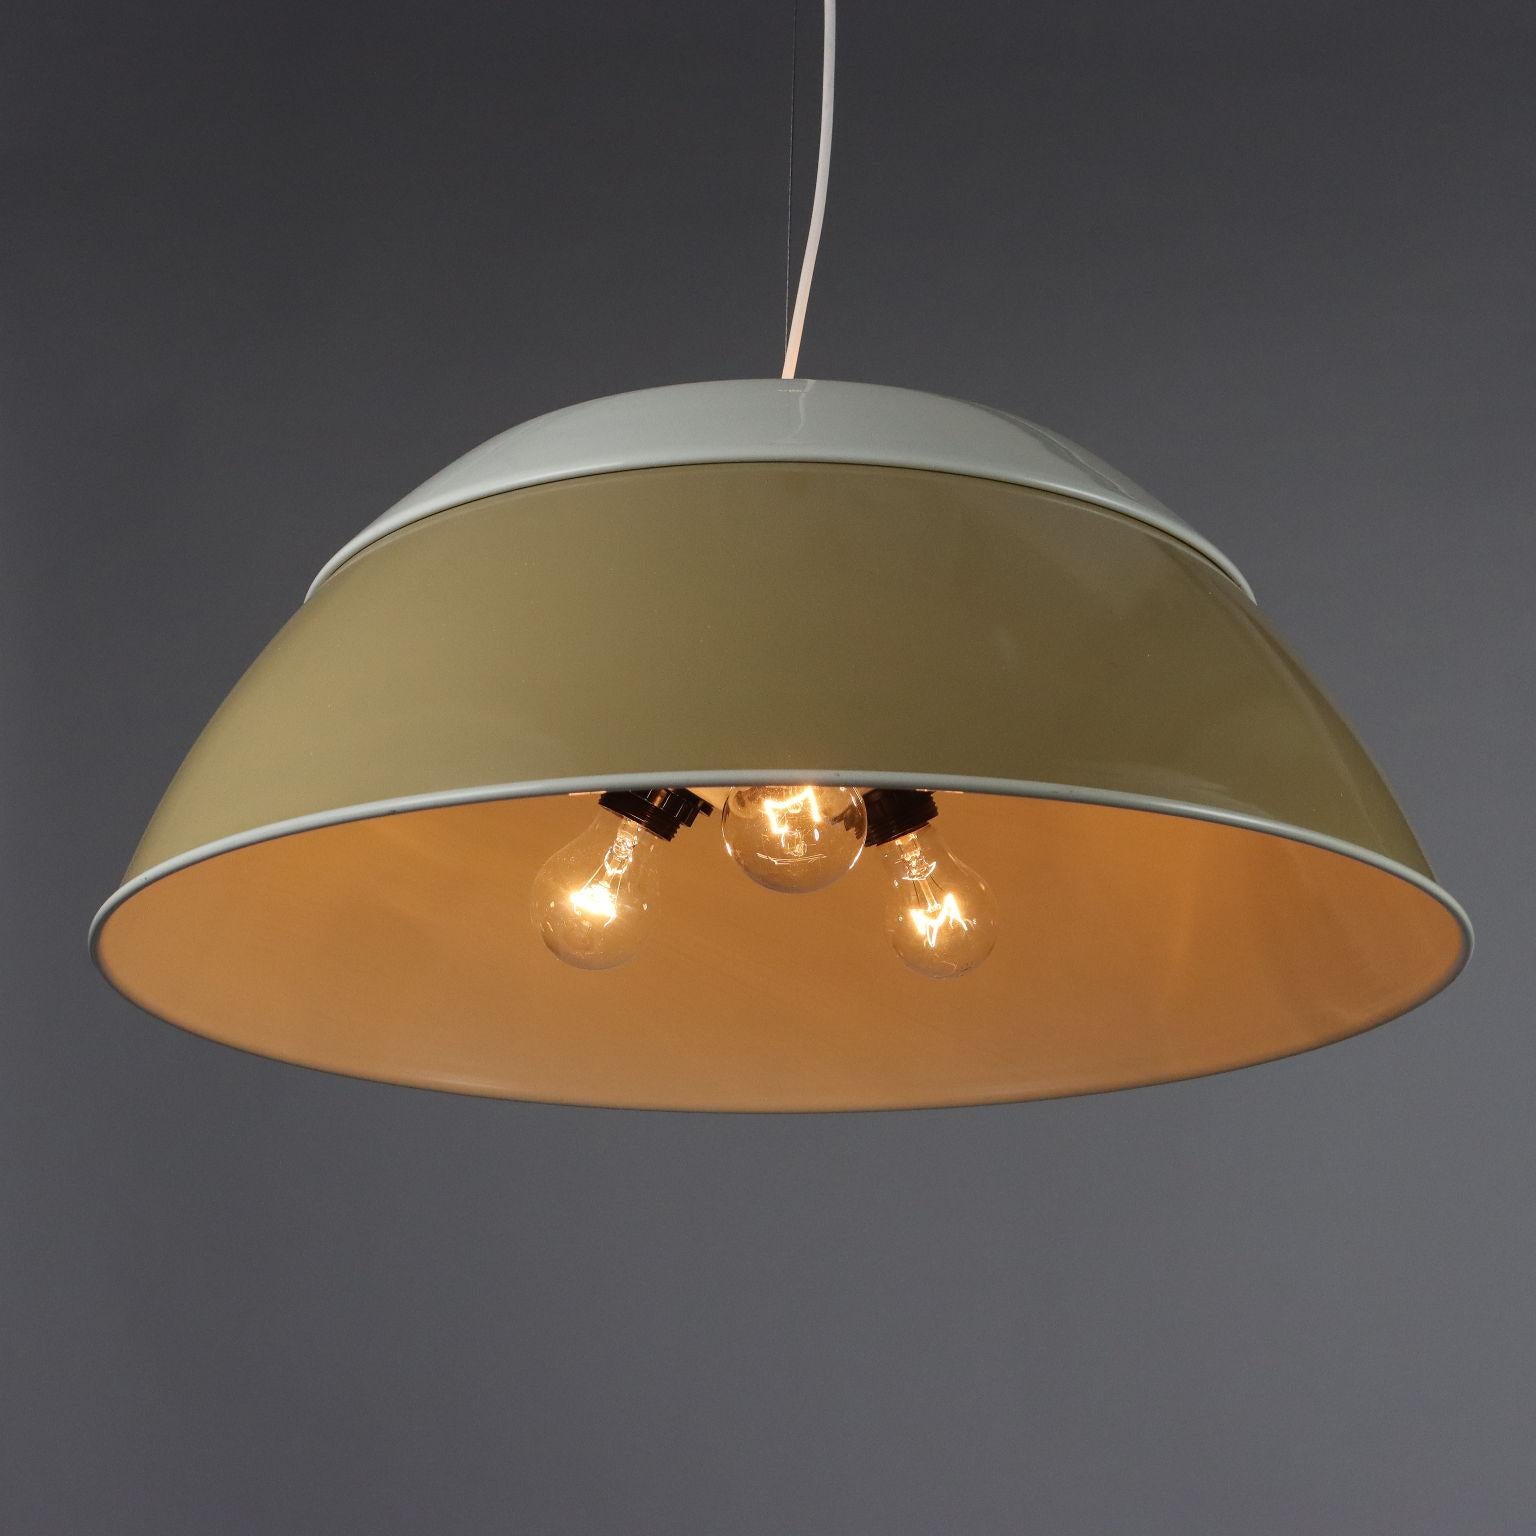 Italian 60s Ceiling Lamp For Sale